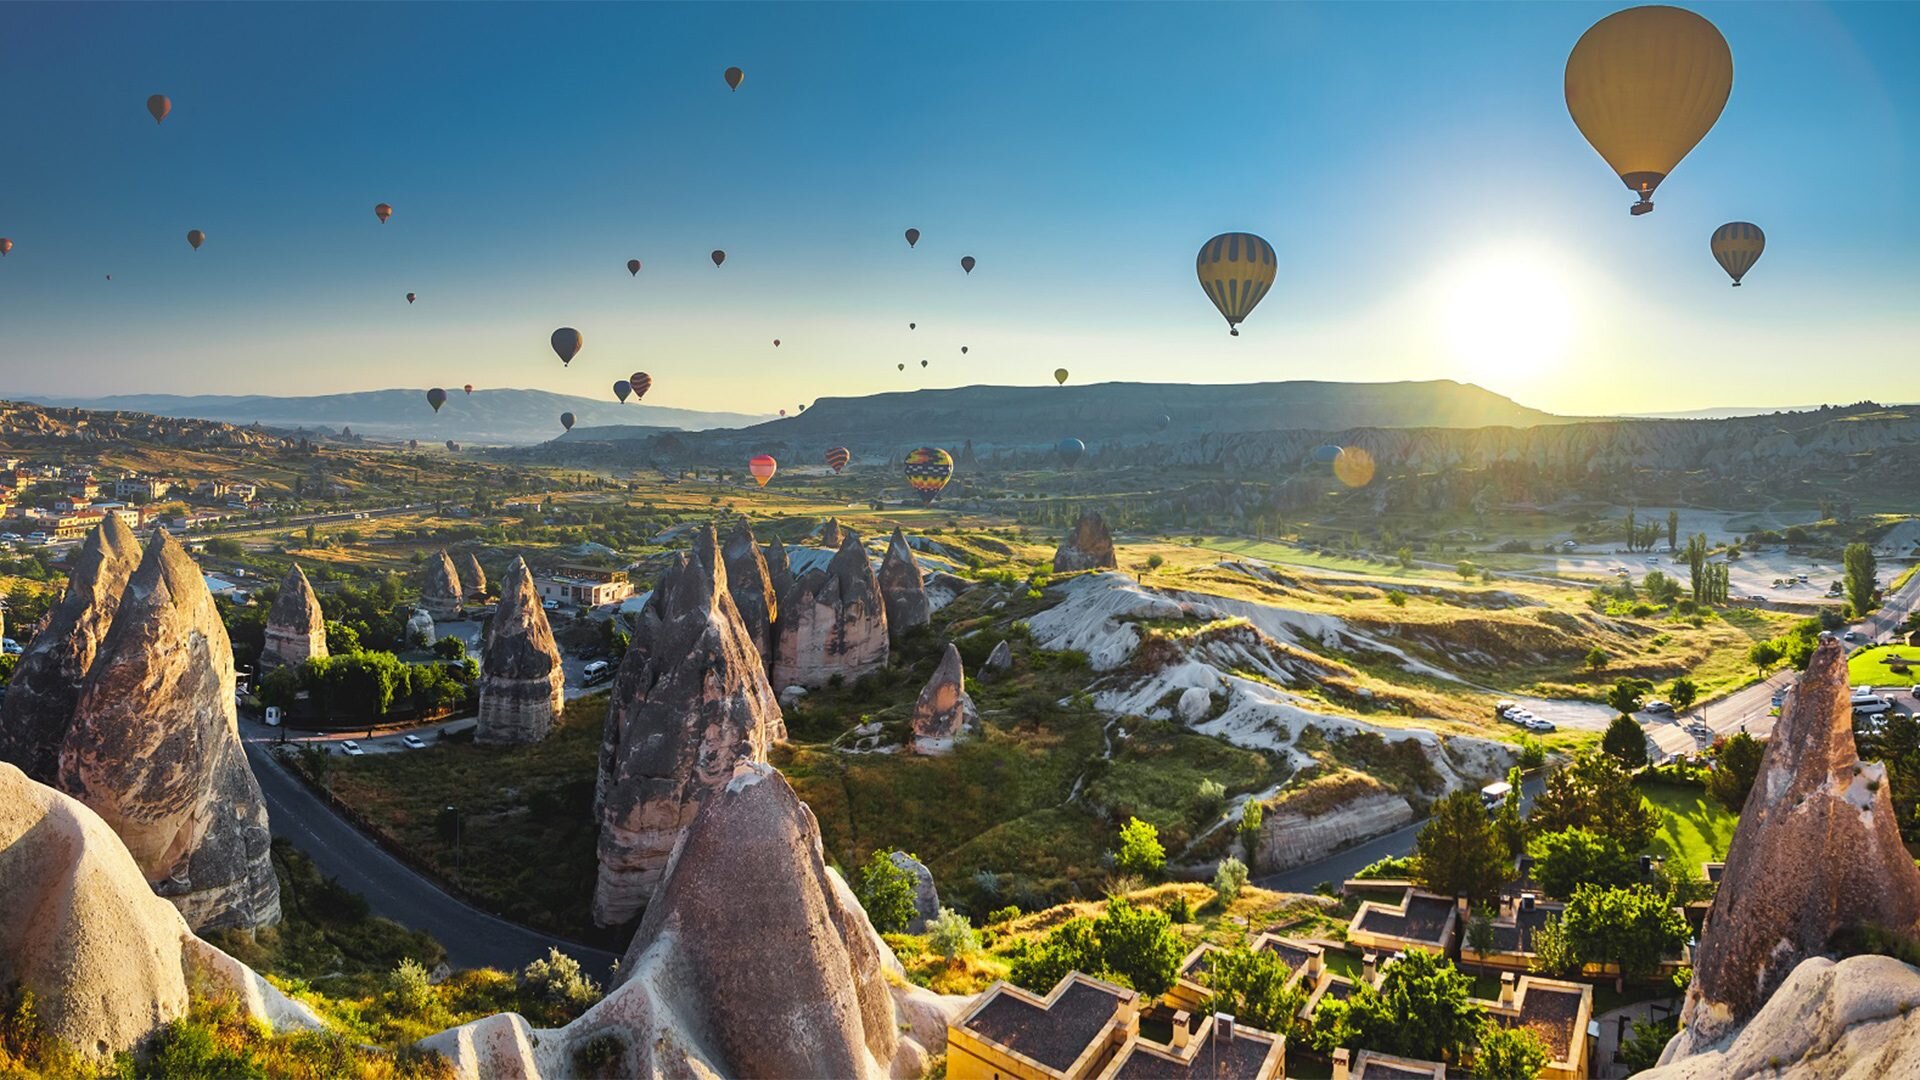 Lot balonem, Kapadocja, Turcja